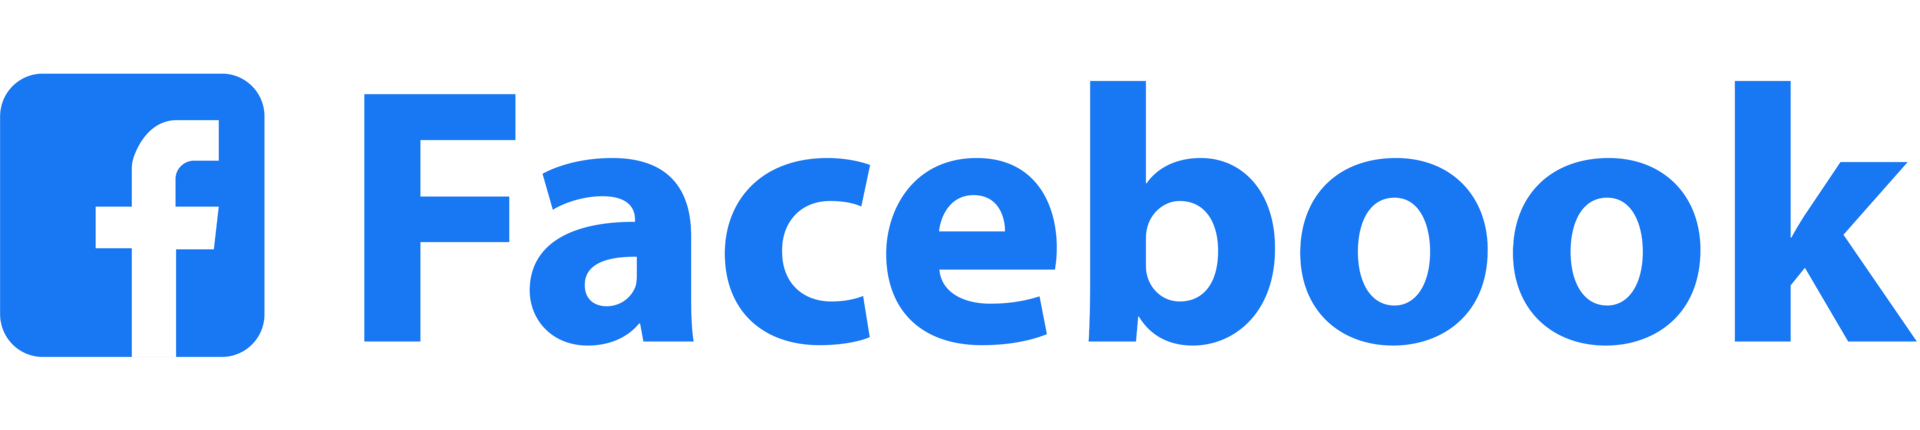 Facebook logos, websites, and applications popular online social media png